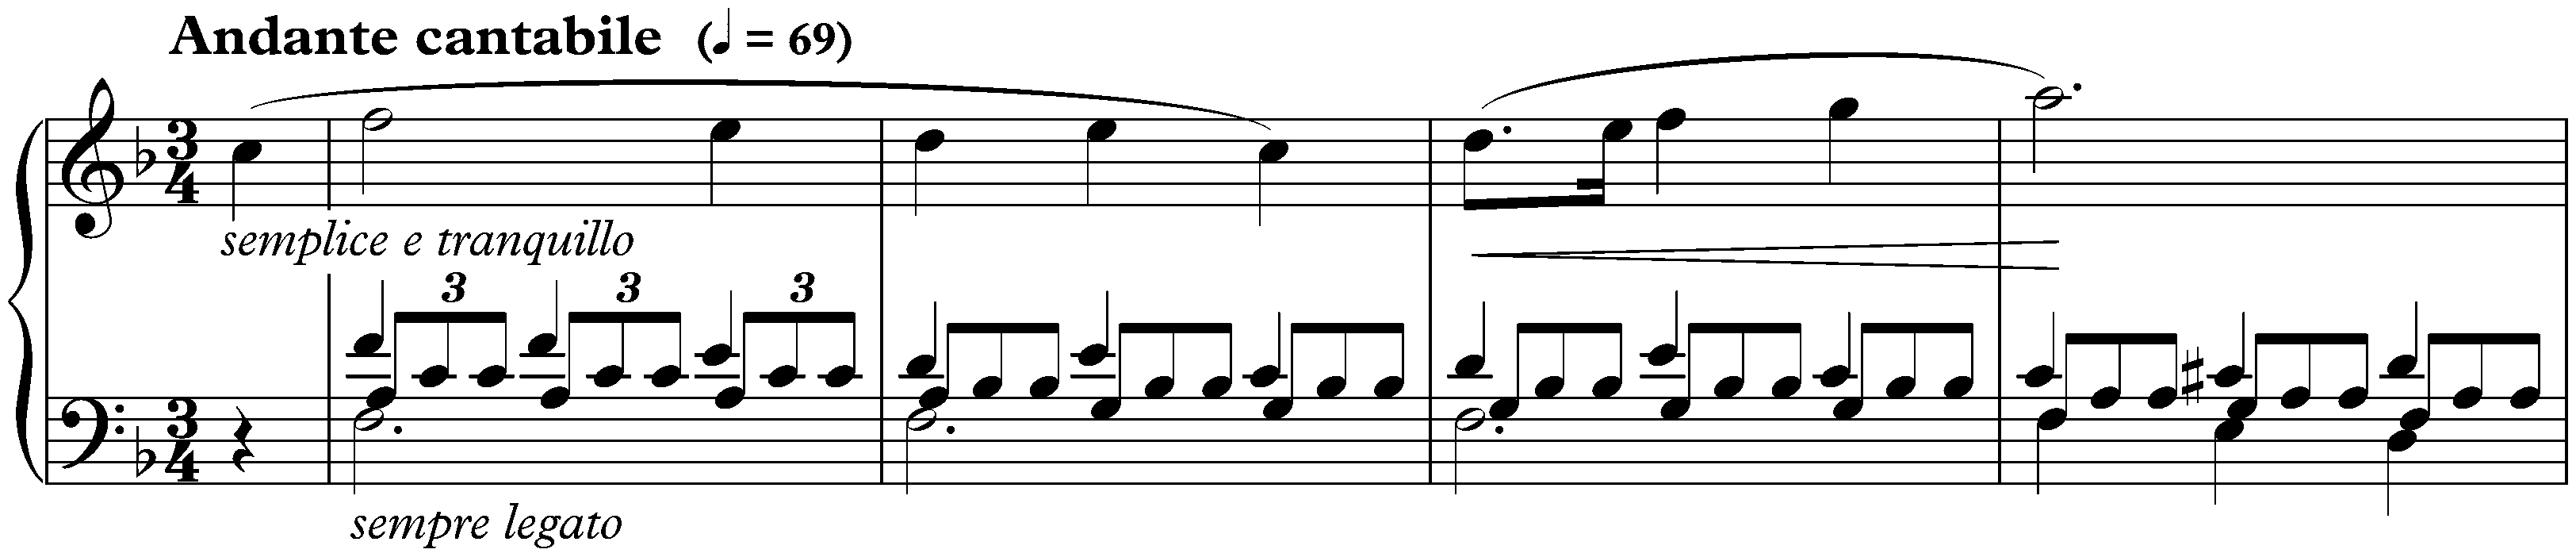 Three Nocturnes, op. 15; 1. F major